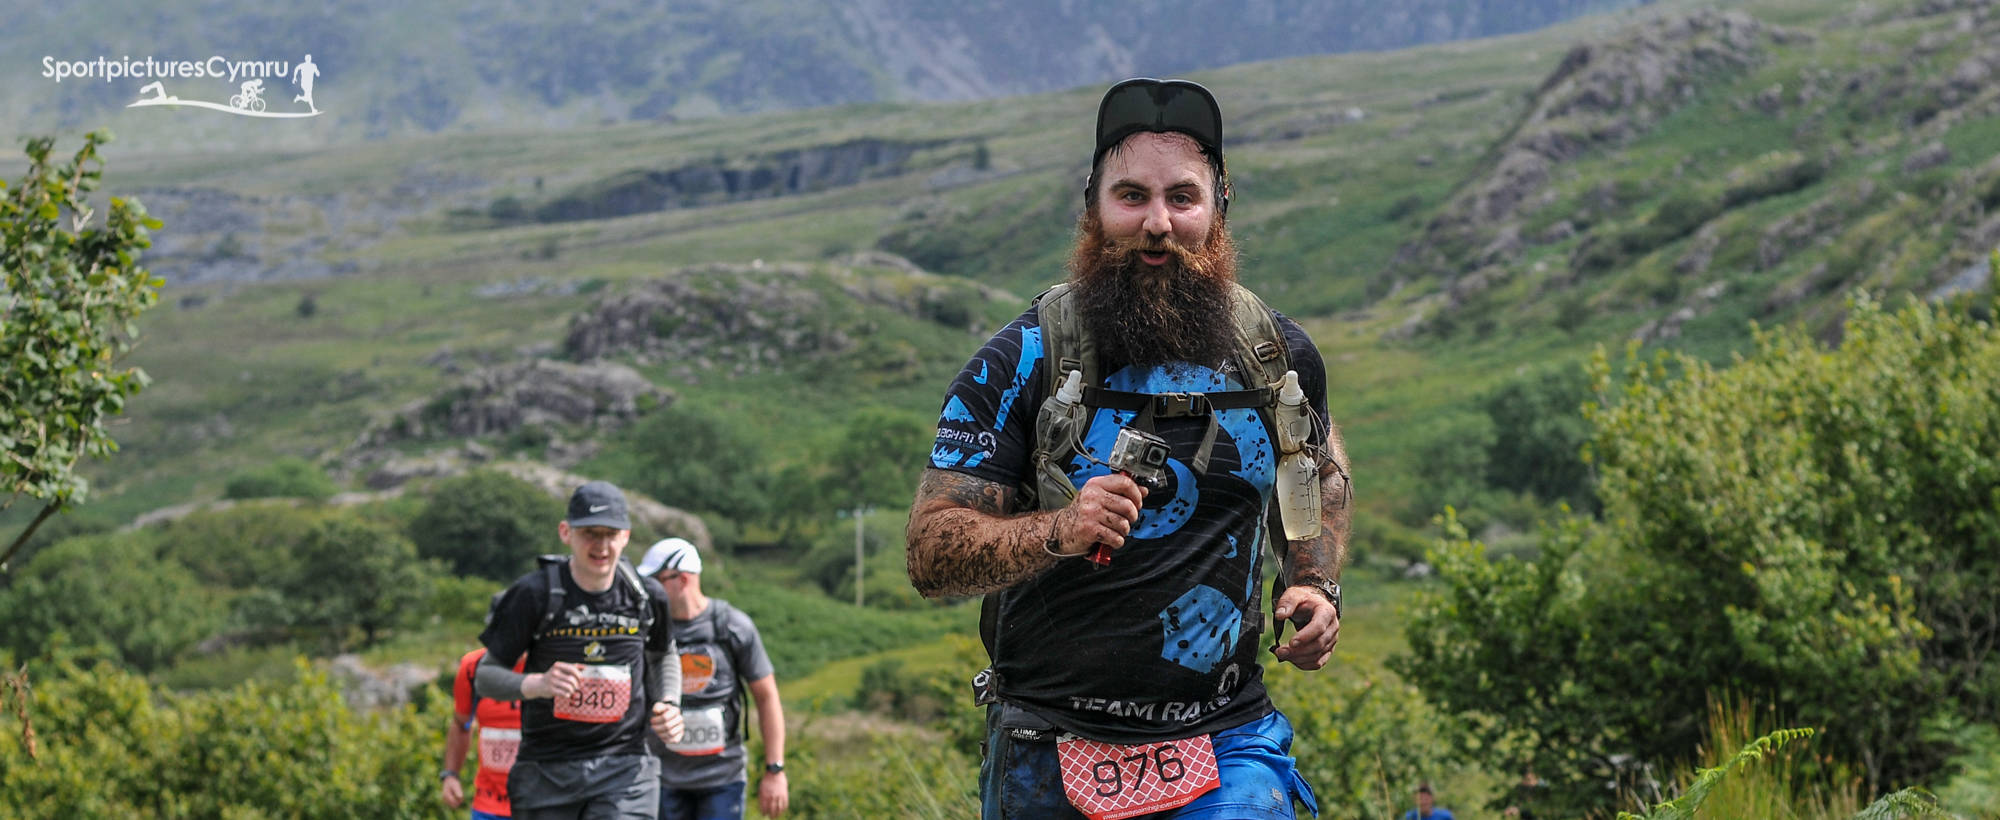 A runner with a beard on the Snowdonia Trail Ultra Marathon